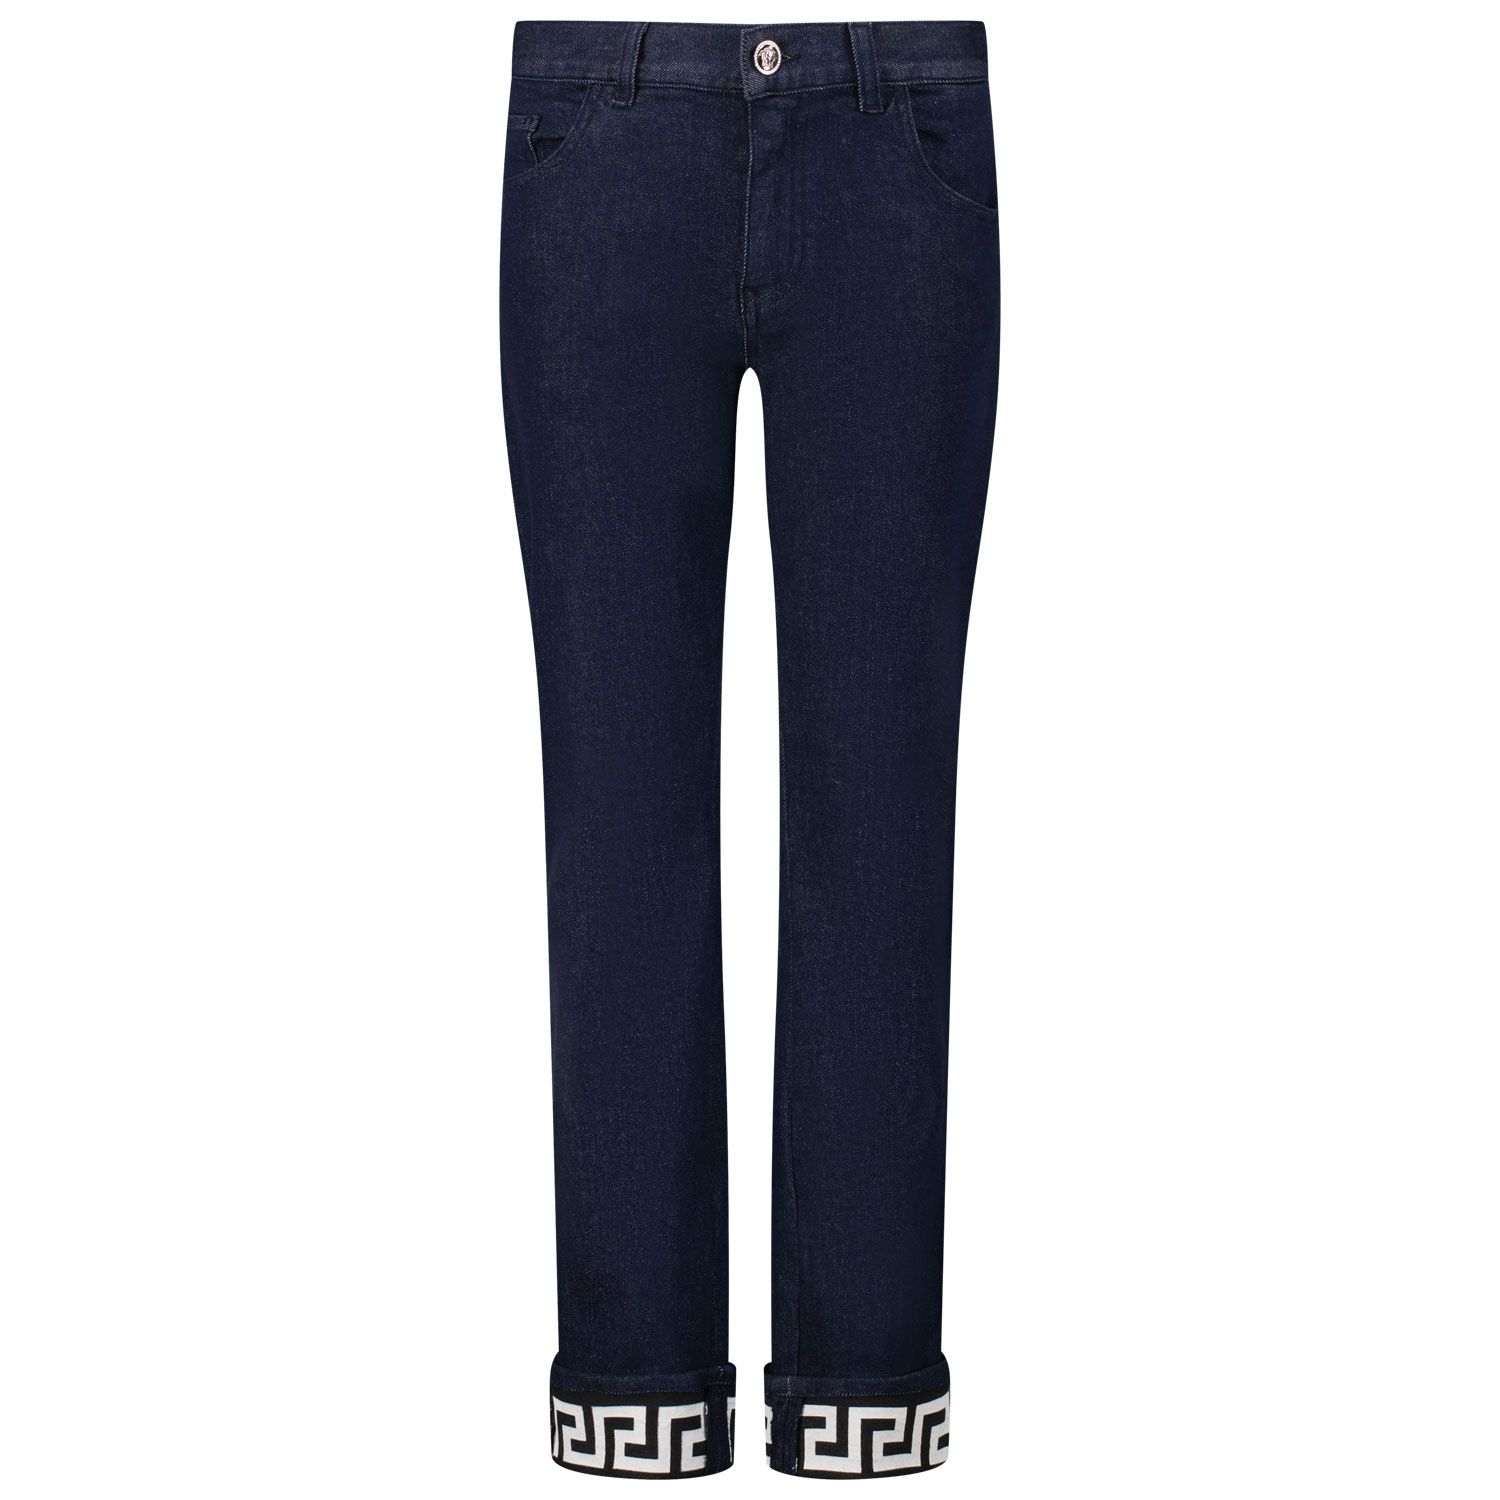 Afbeelding van Versace 1001676 1A01374 kinder jeans jeans